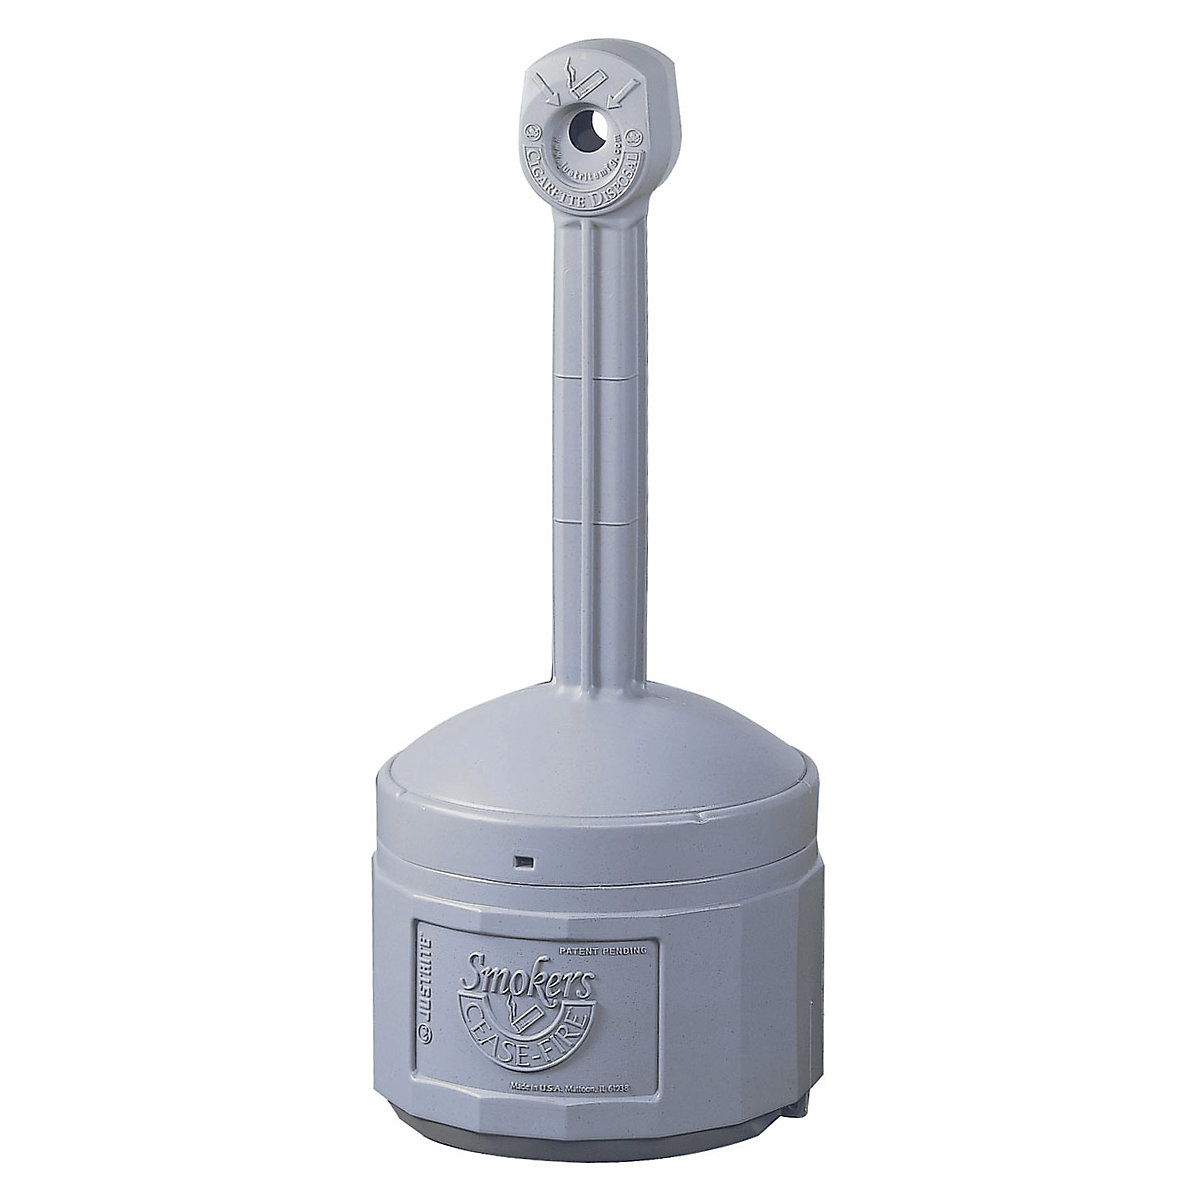 Safety pedestal ashtray, self-extinguishing - Justrite